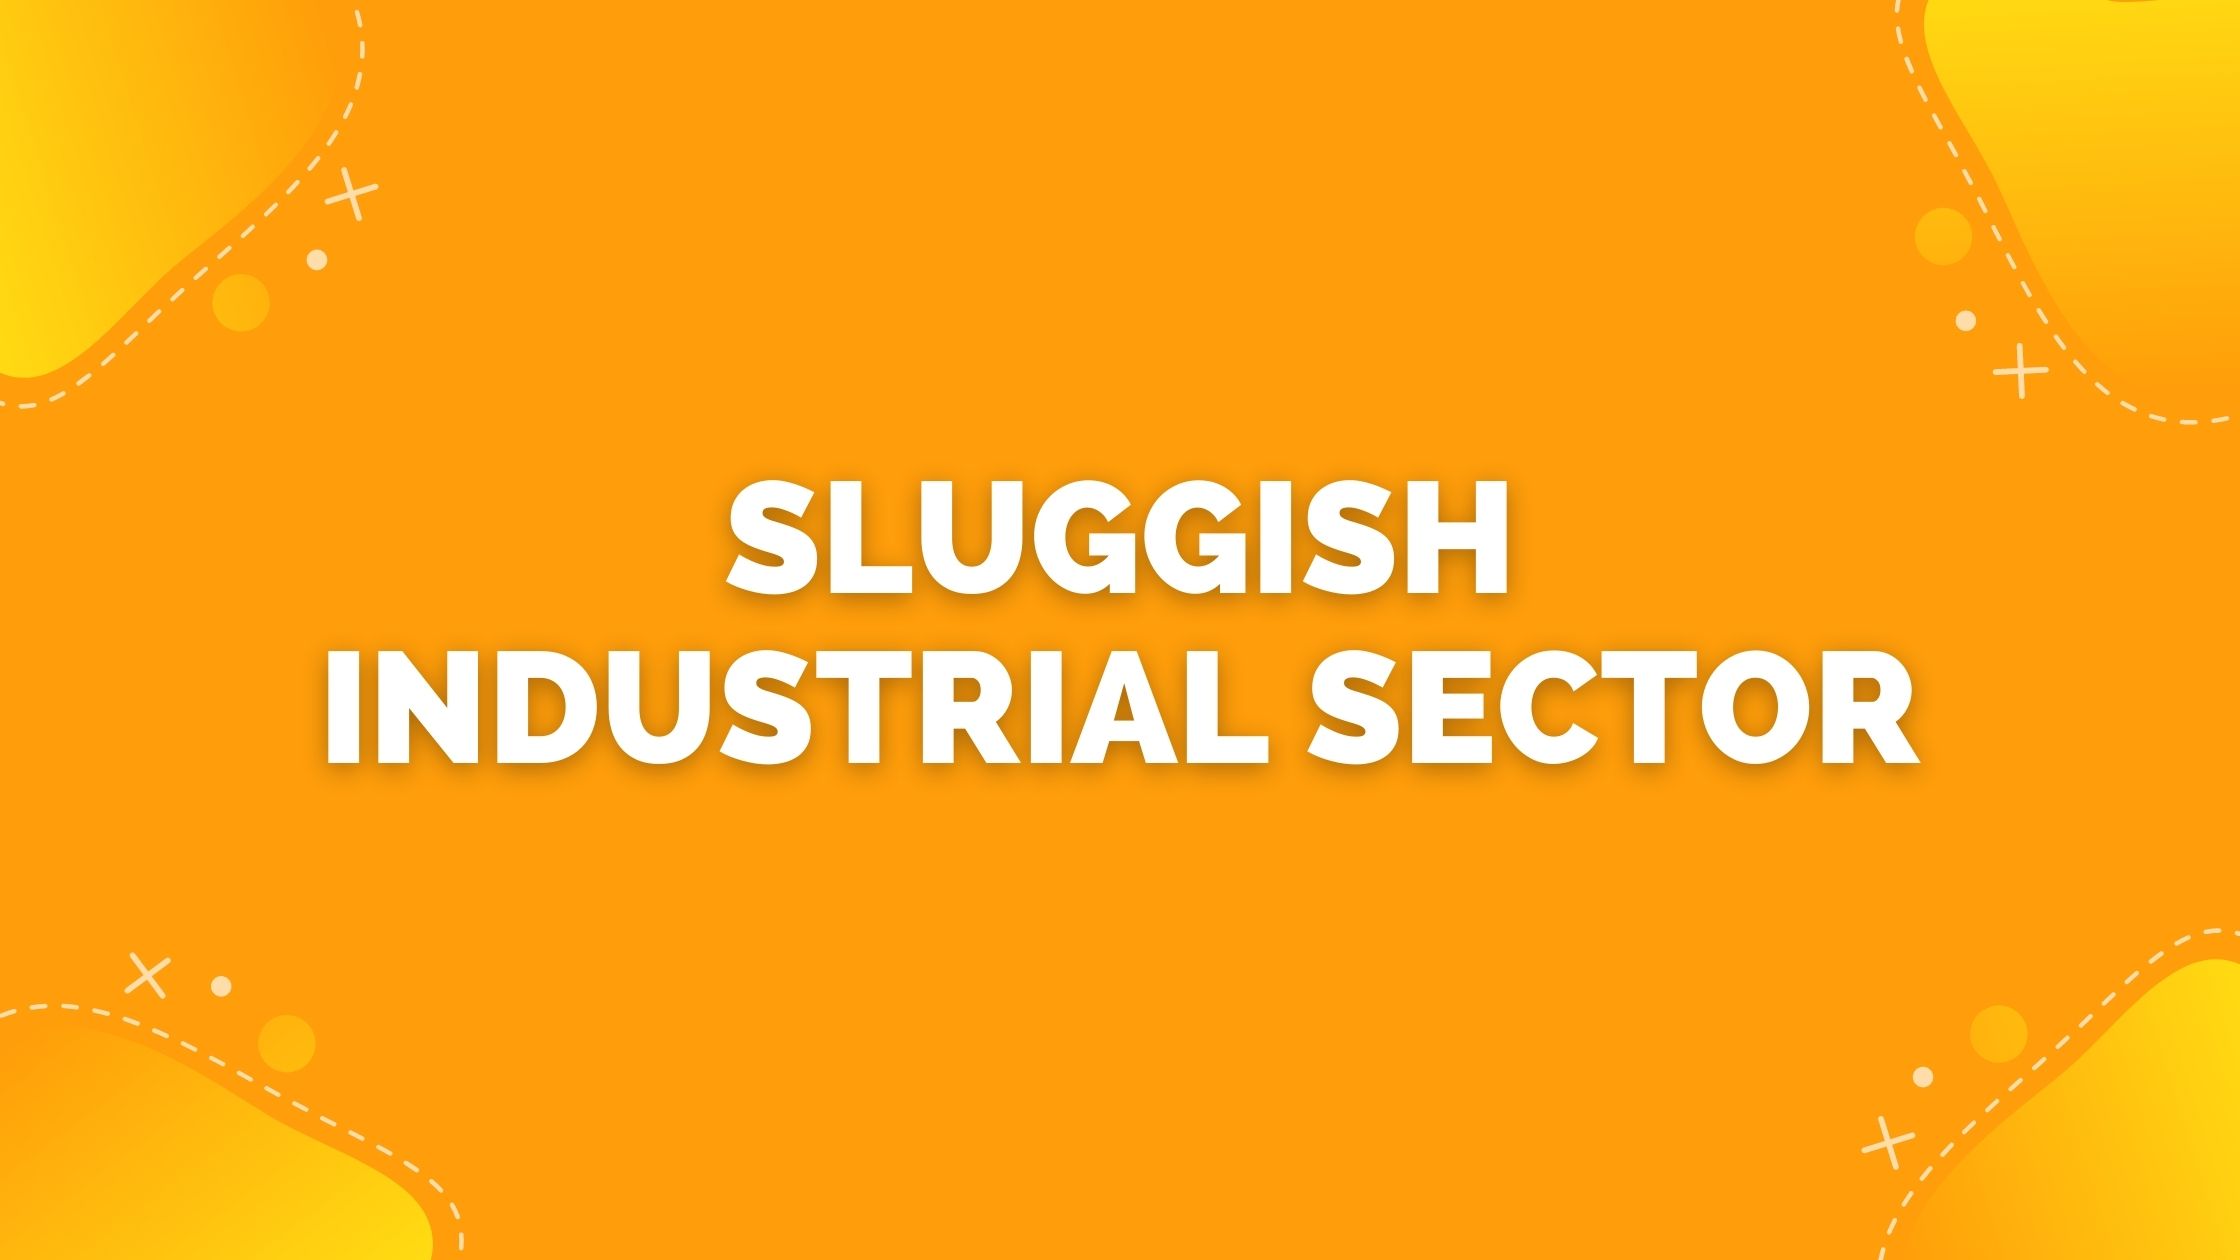 Sluggish industrial sector